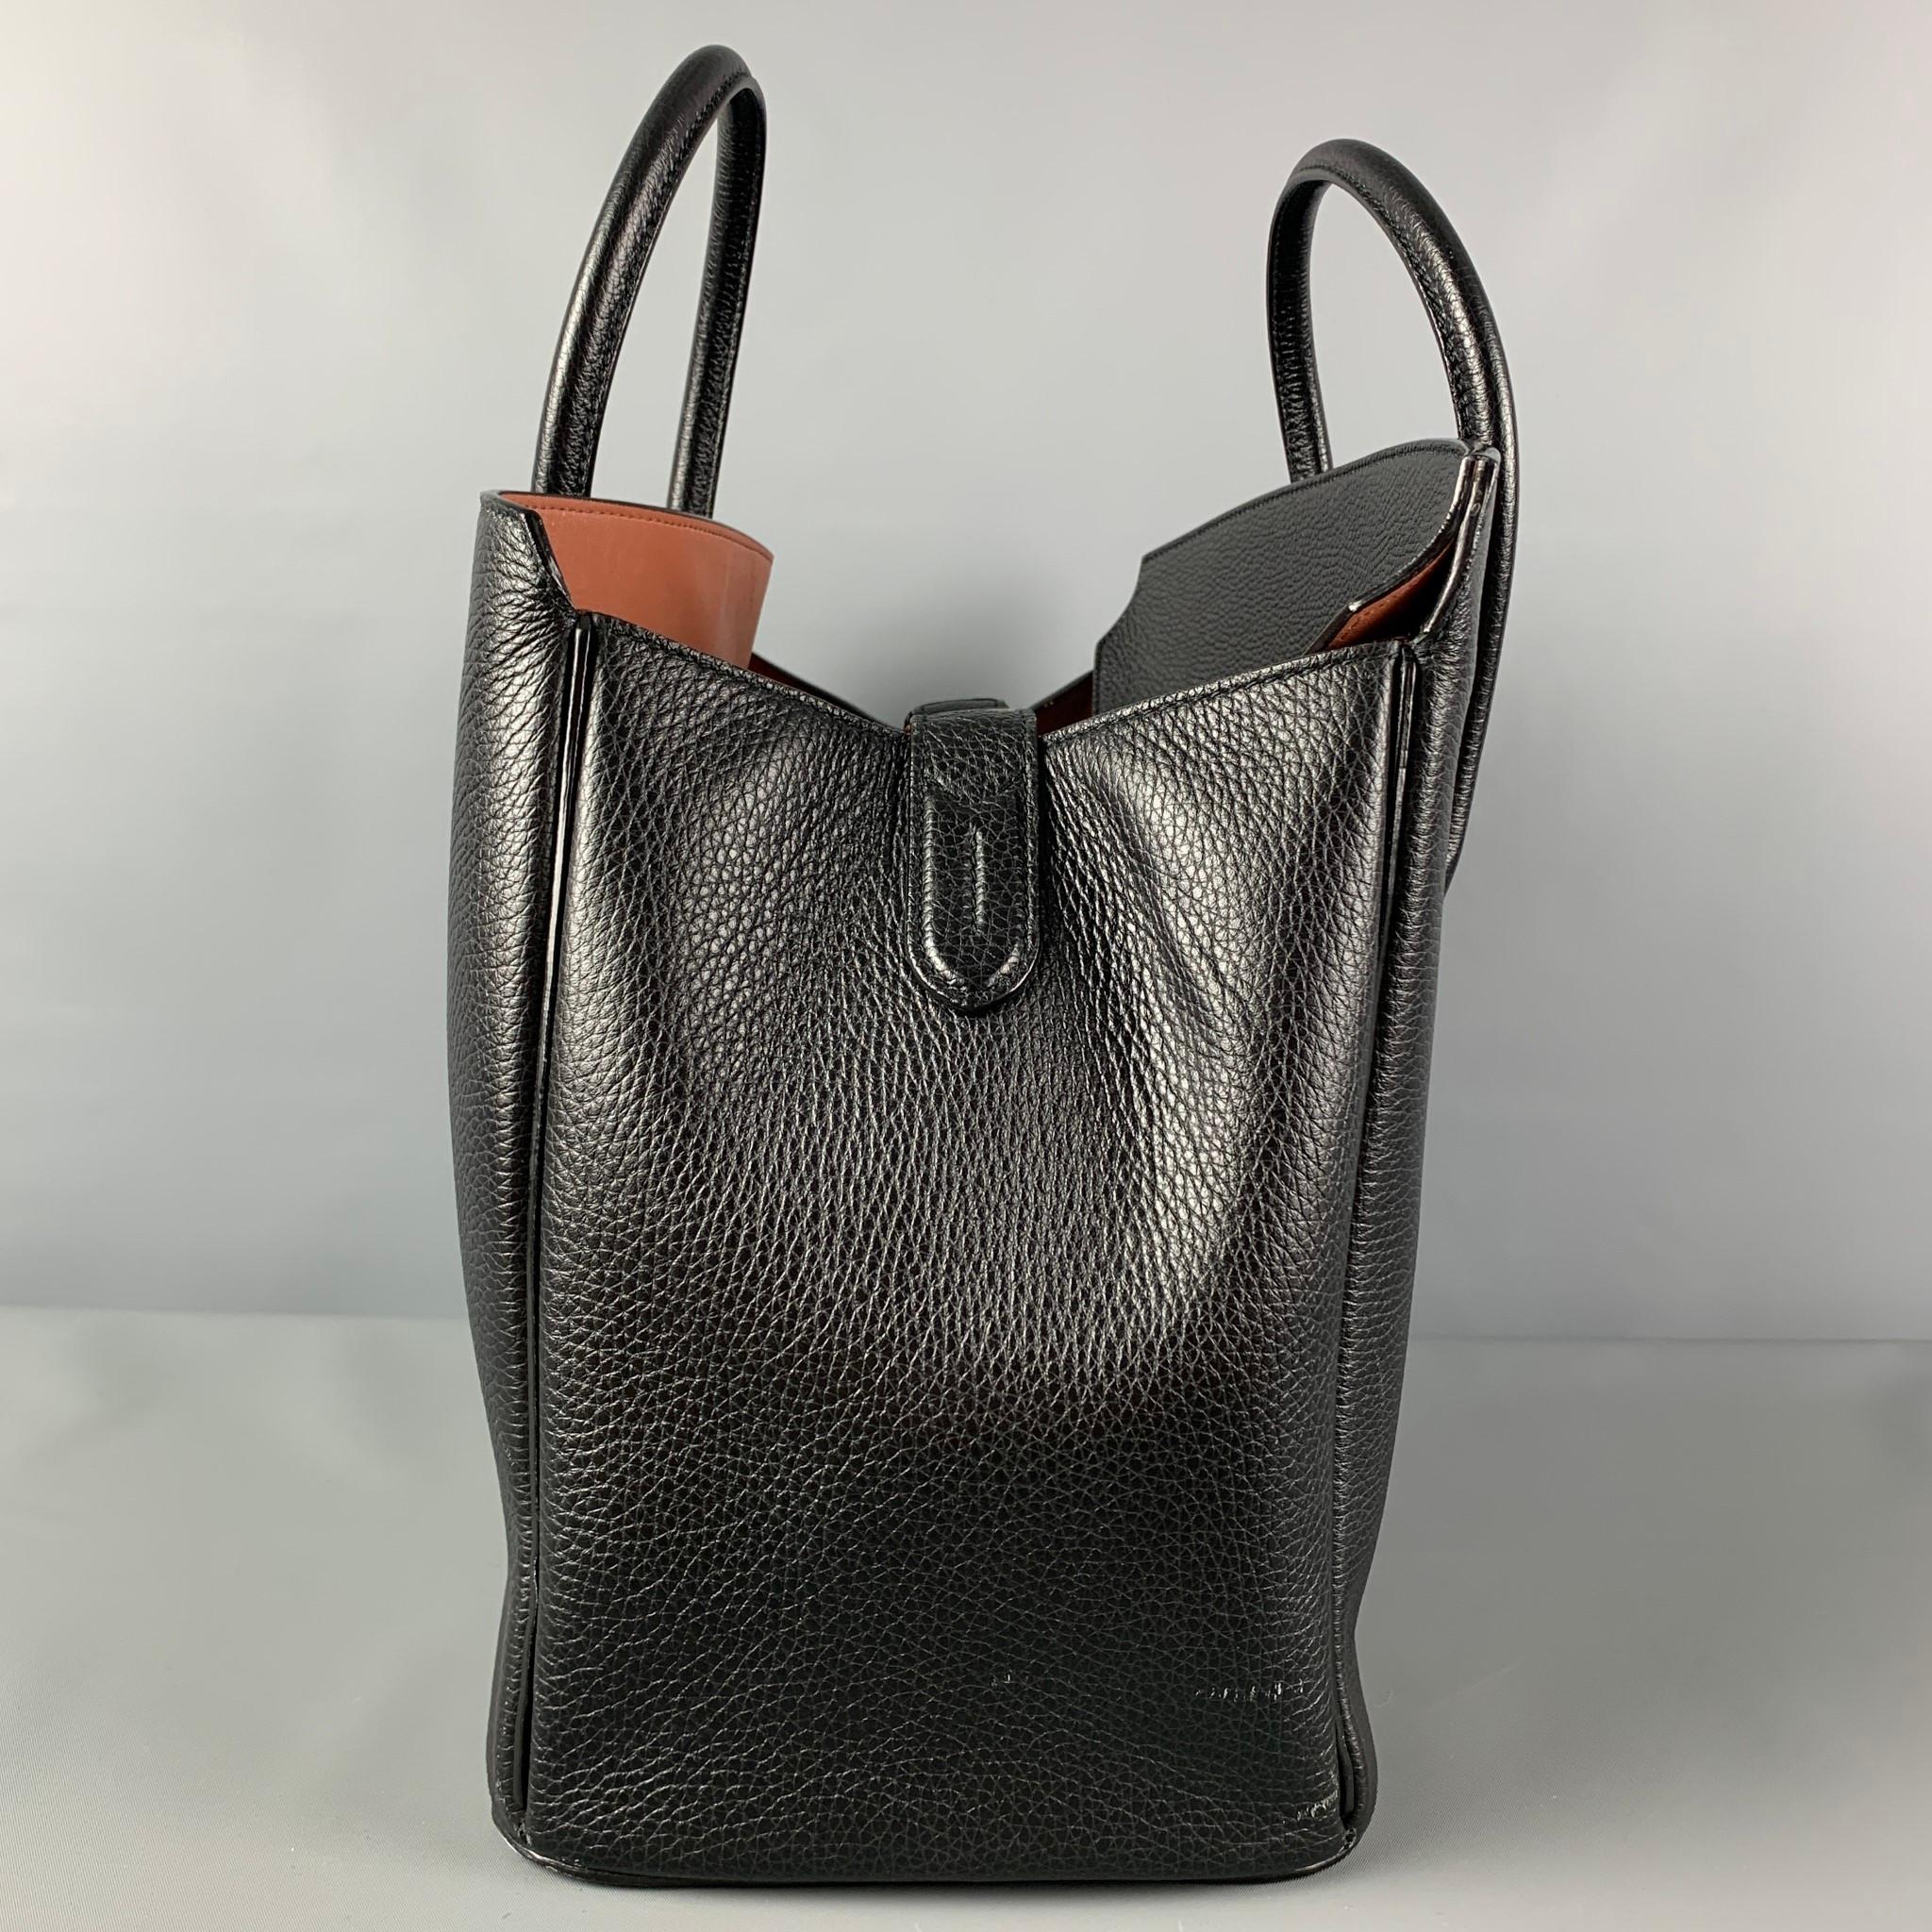 BALLY Black Pebble Grain Leather Top Handles Handbag 1